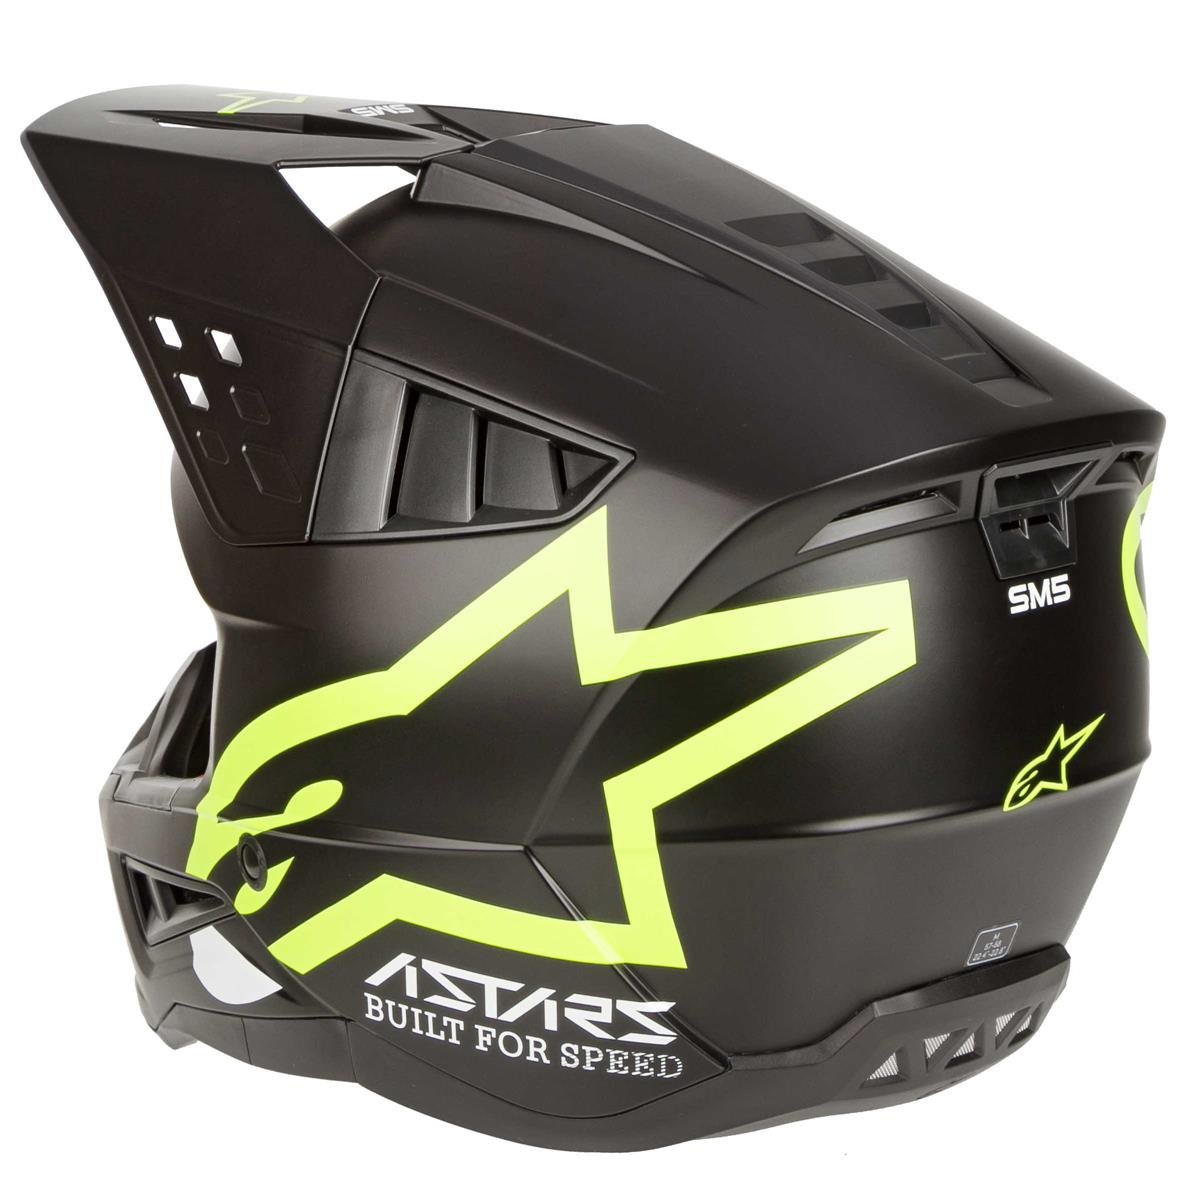 Alpinestars 2021 Supertech S-M5 Compass MX Motocross Helmet Matt Black/Fluo Ye 